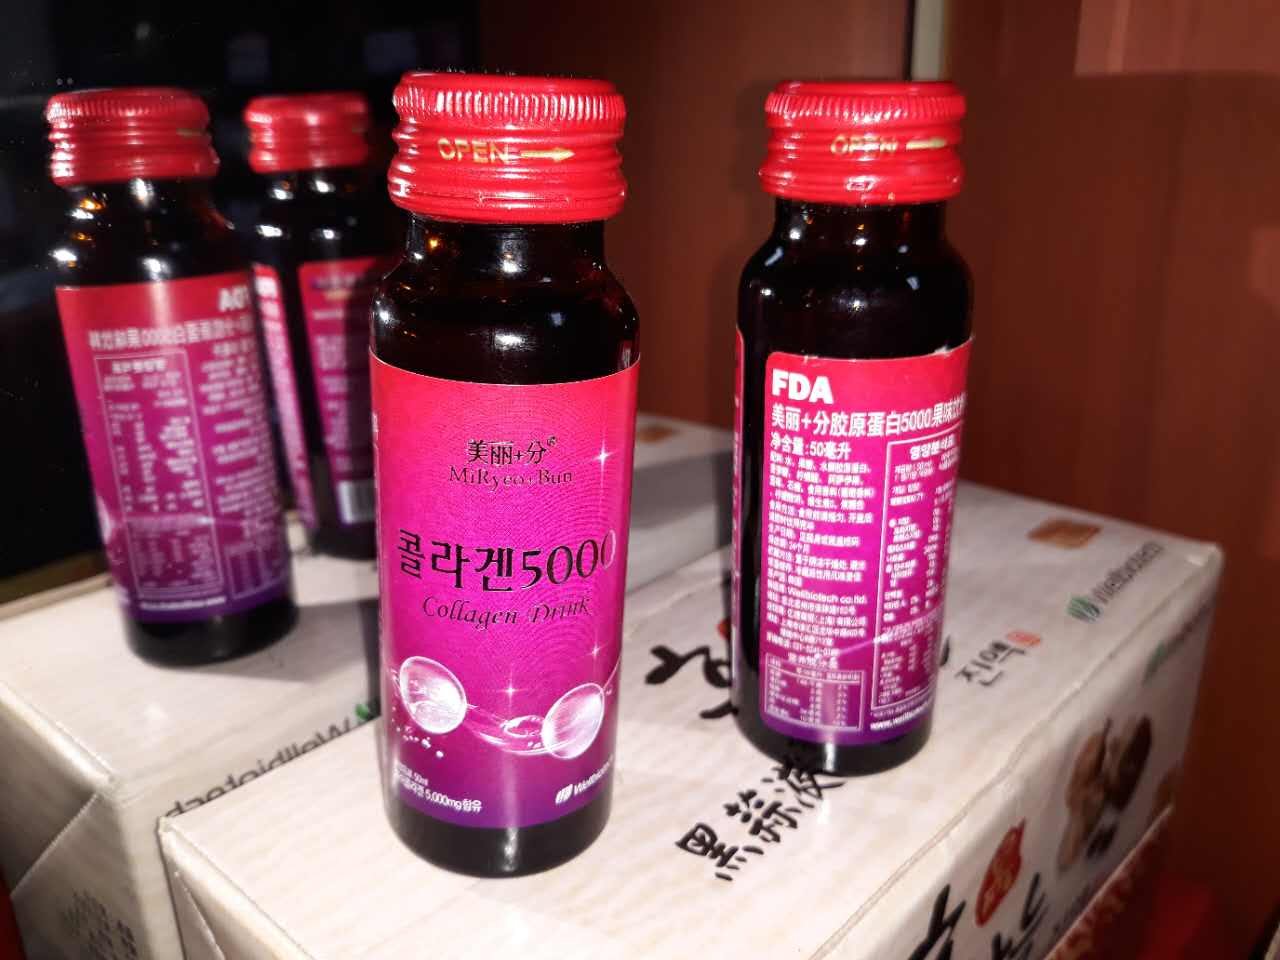 Miryeo+Bun Collagen Drink/ Korea